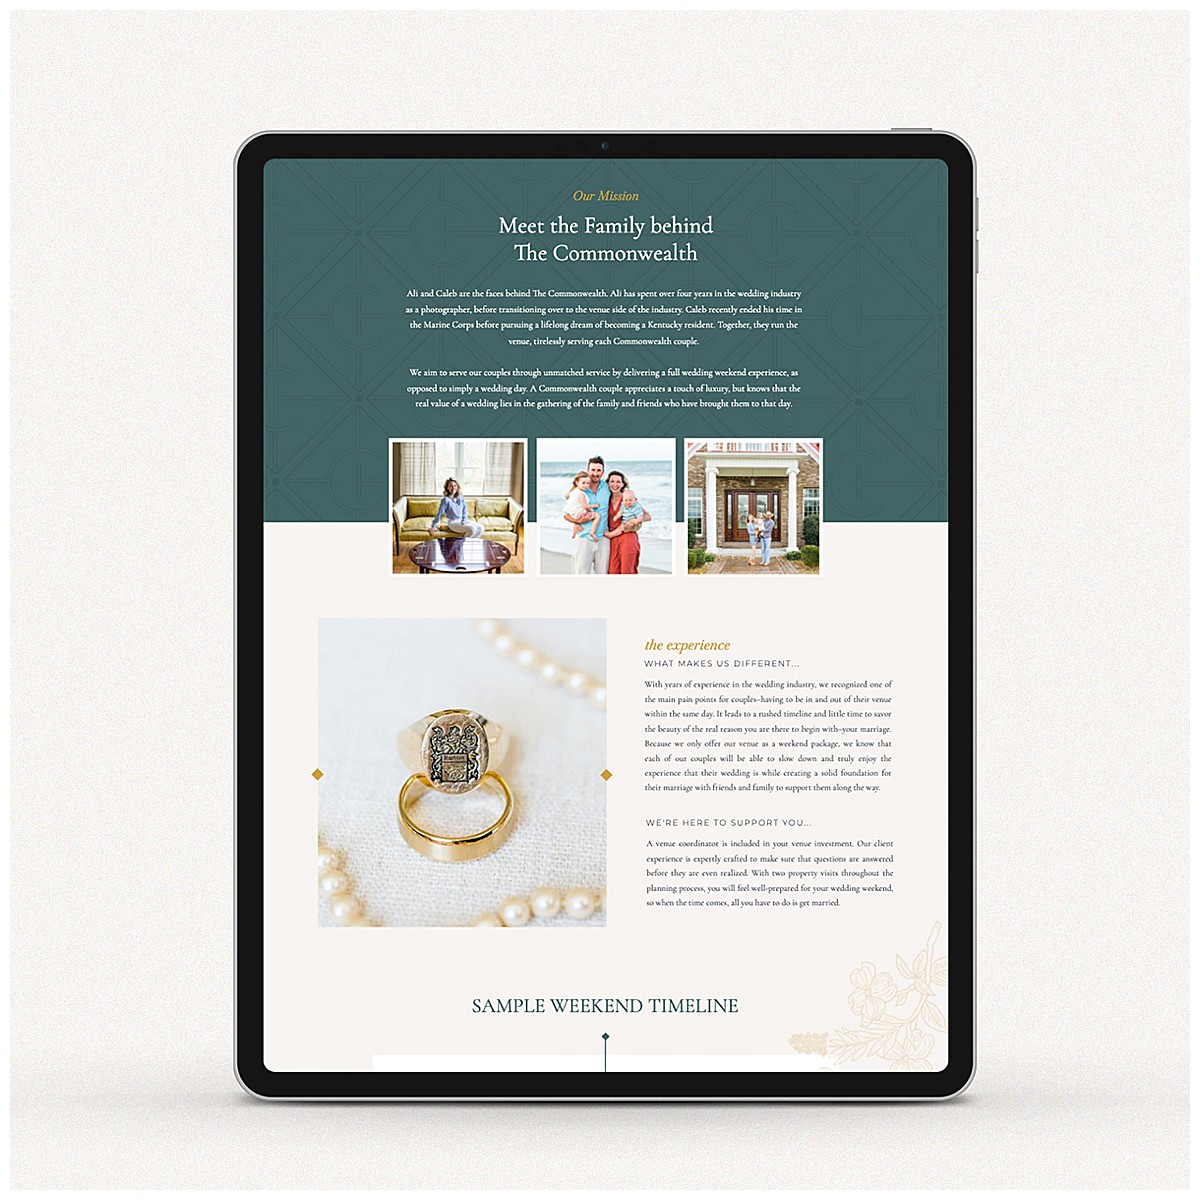 Wedding Venue Showit Website Design